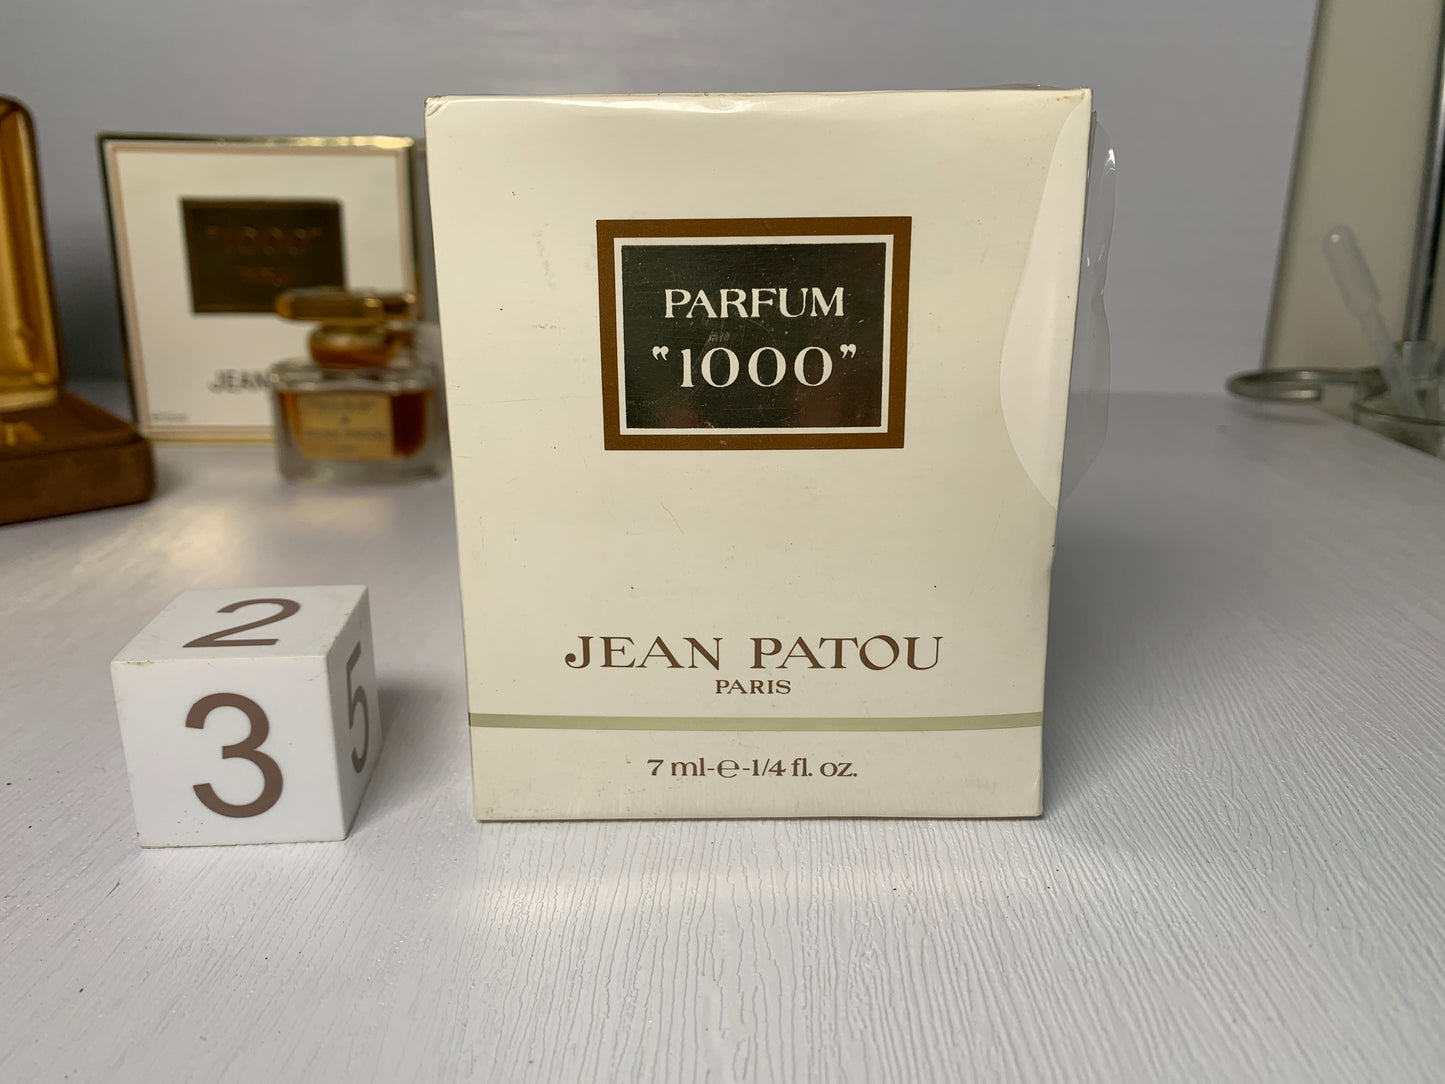 Rare Jean patou joy 1000 parfum perfume 7.5ml 1/4 oz 15ml 1/2 oz - 12DEC22